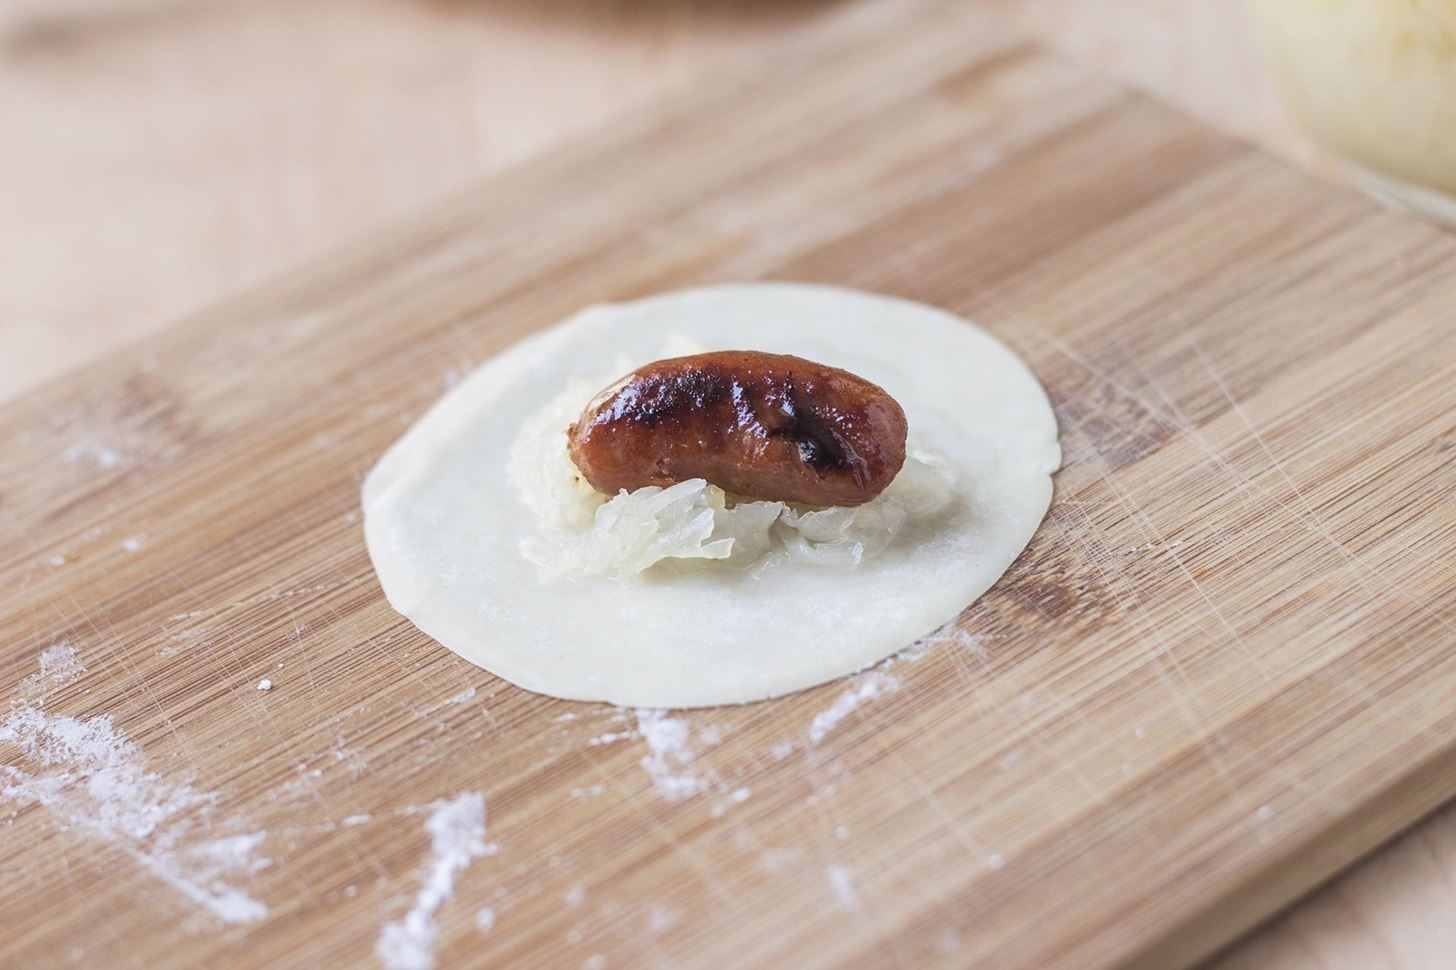 Get Creative: Make Dumplings with Cheeseburgers & Kielbasa